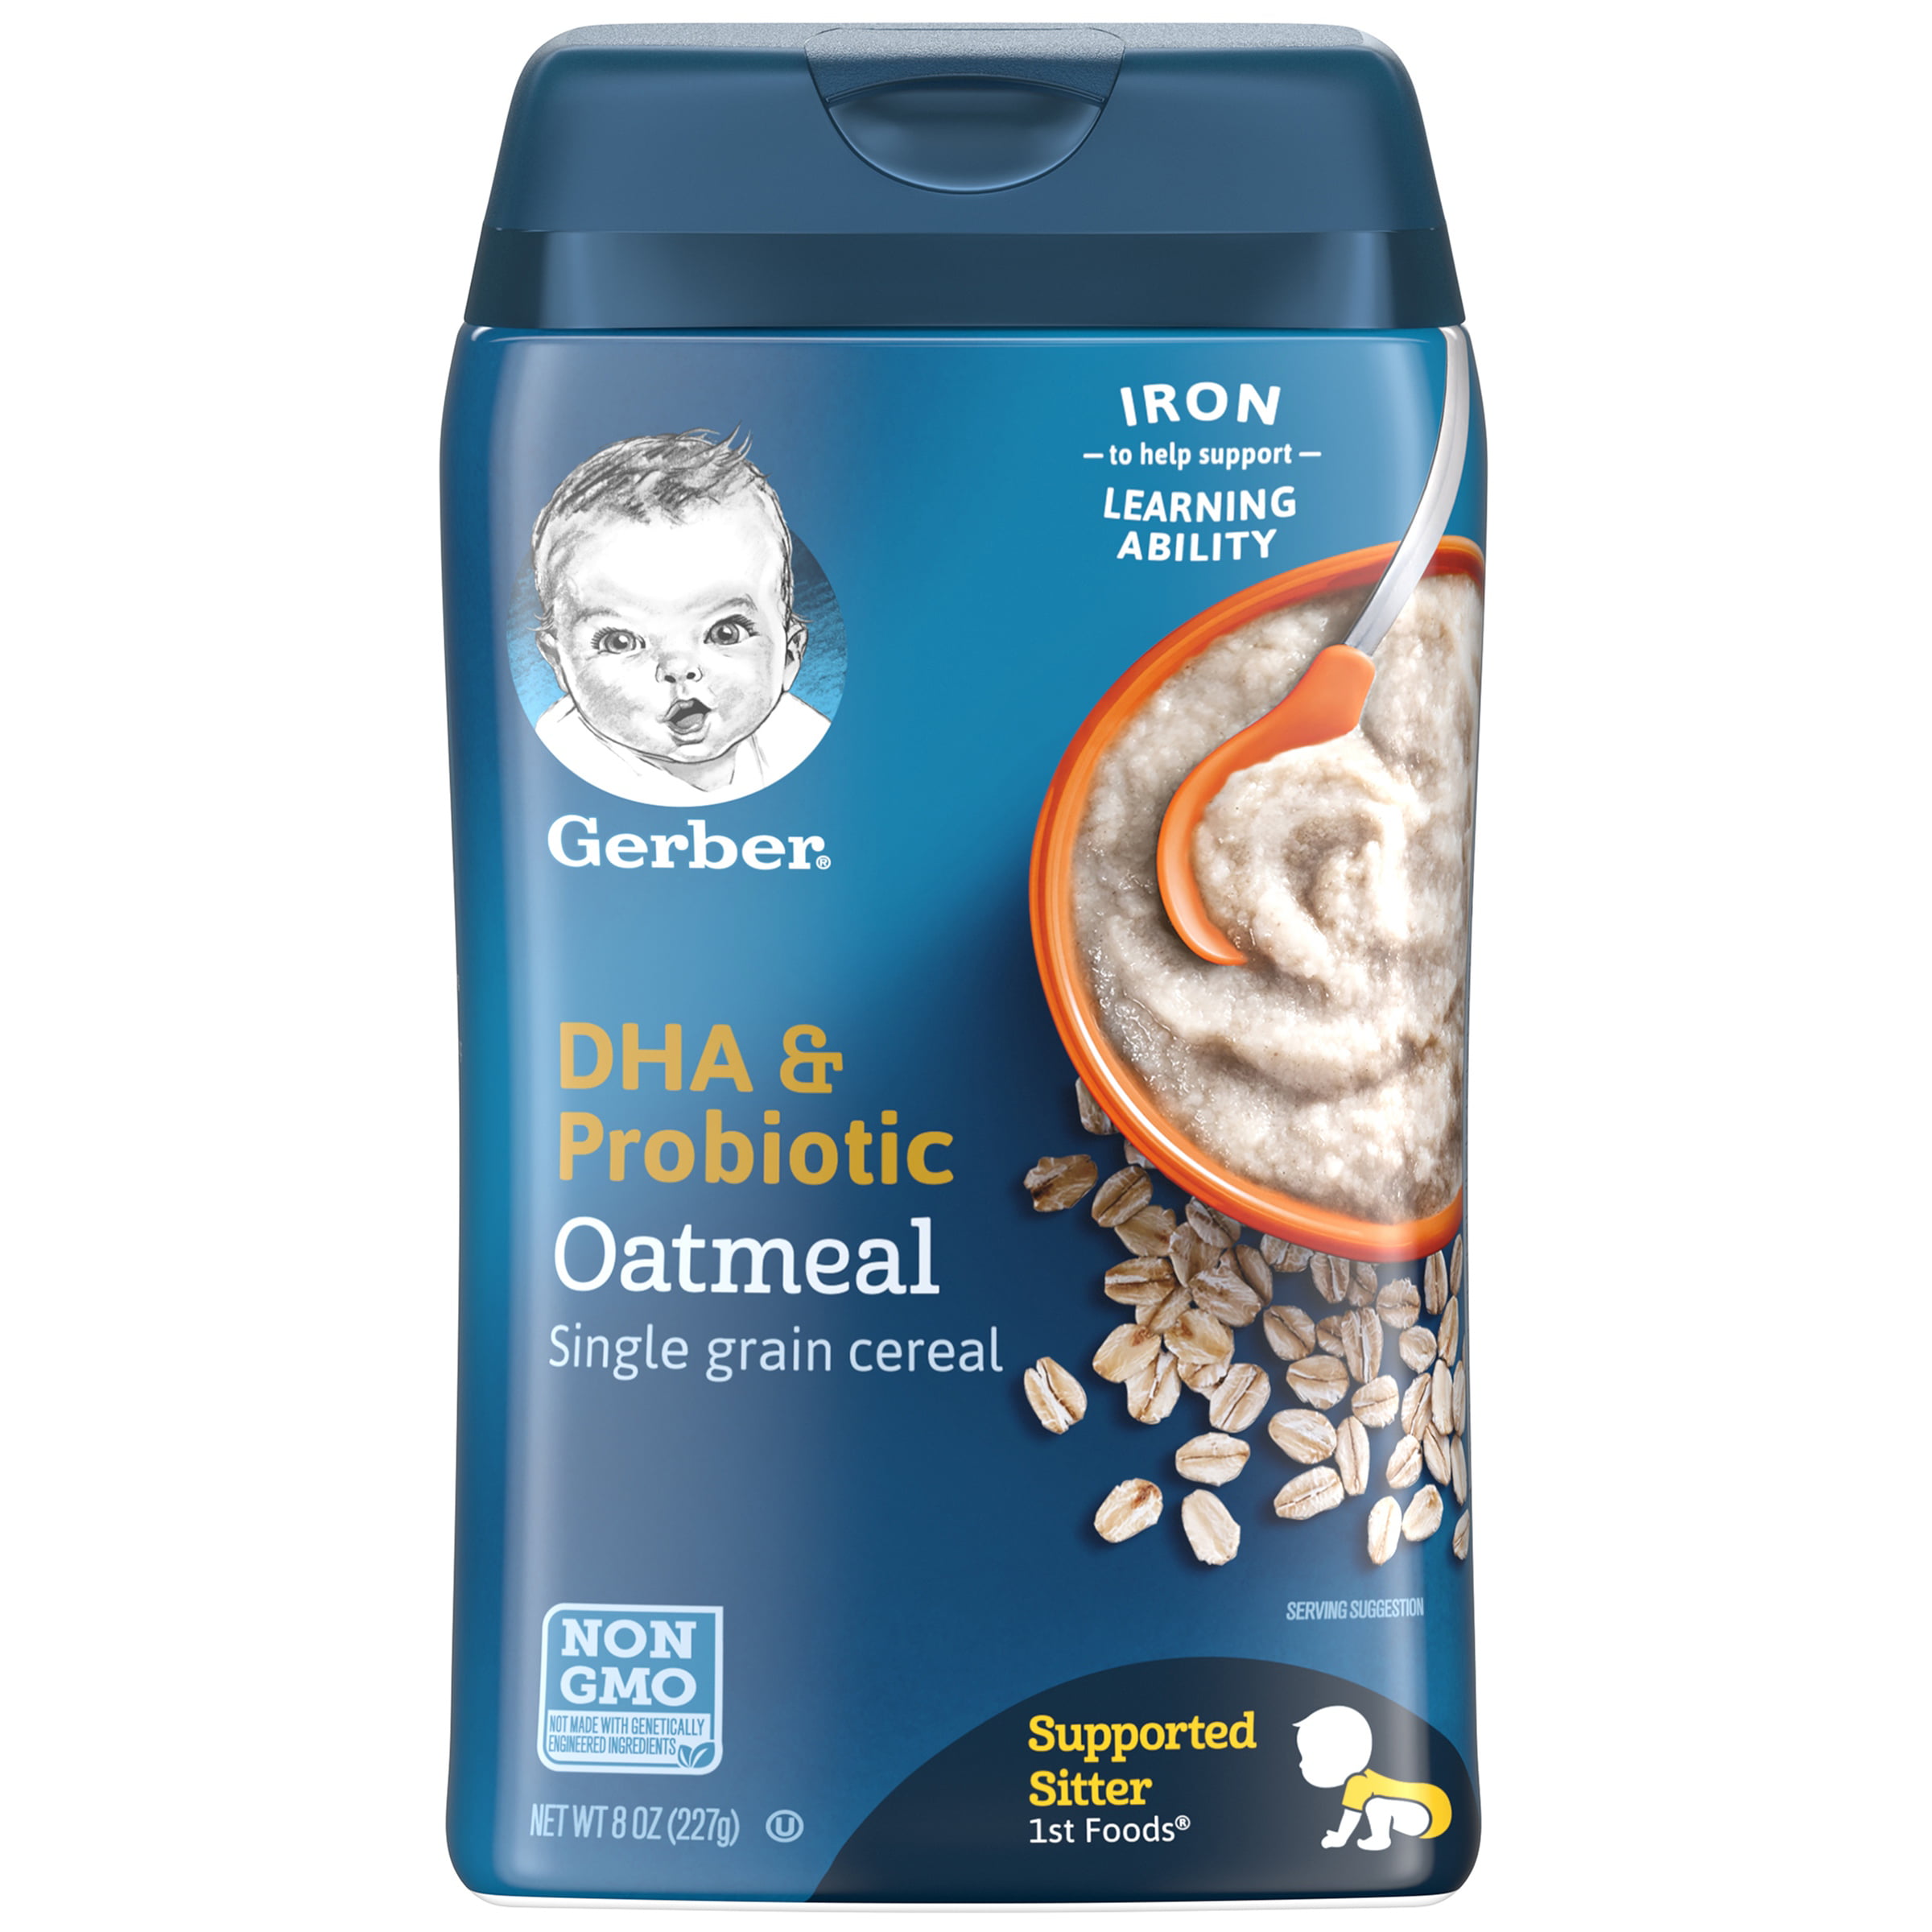 happy baby probiotic oatmeal